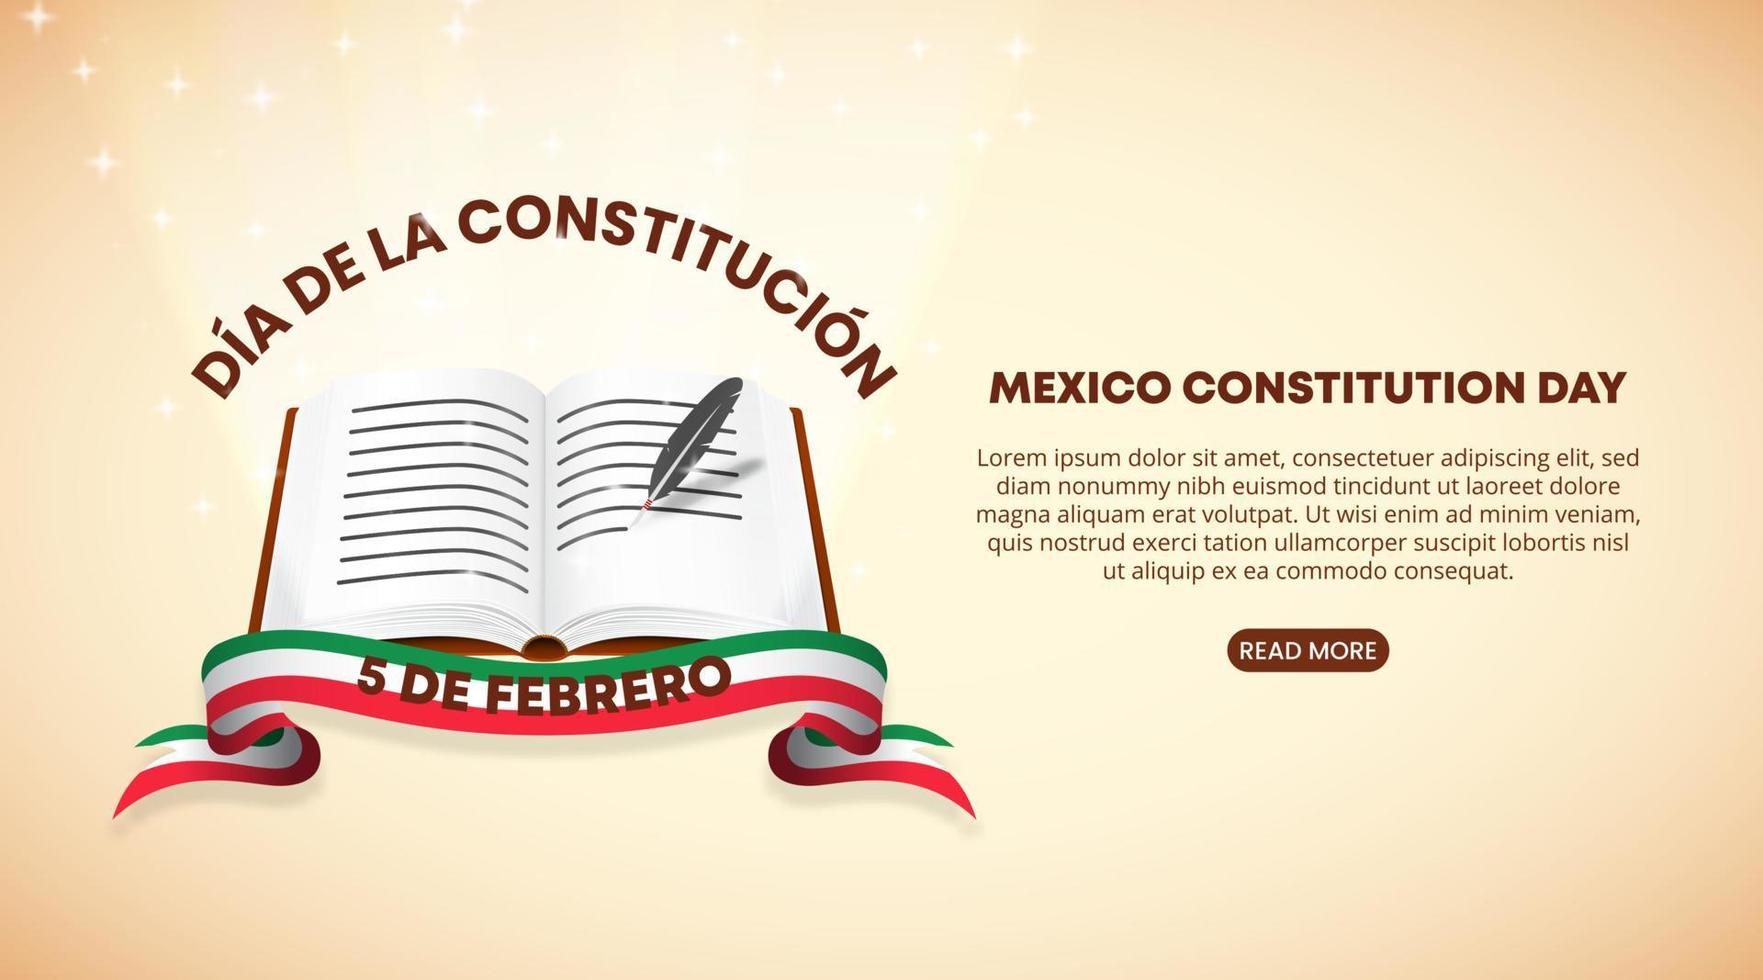 día de la constitución de méxico o antecedentes del día de la constitución mexicana con la constitución mexicana escrita de 1917 y destellos de luz vector